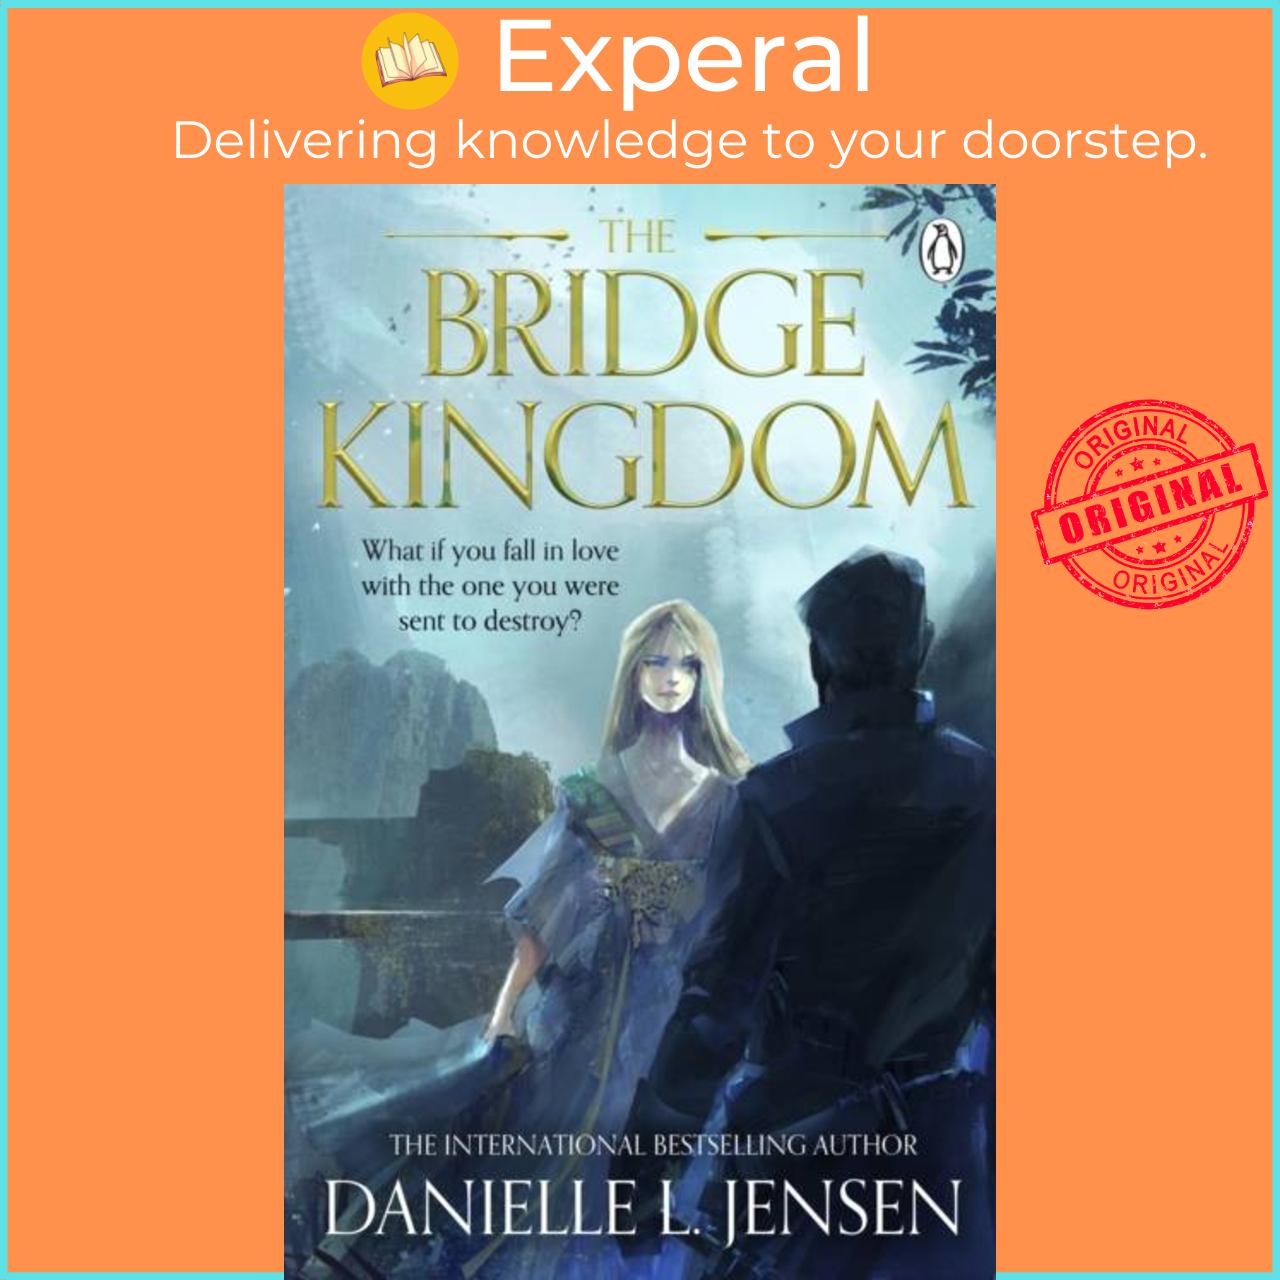 Sách - The Bridge Kingdom - The spellbinding dark fantasy TikTok sensation by Danielle L. Jensen (UK edition, paperback)